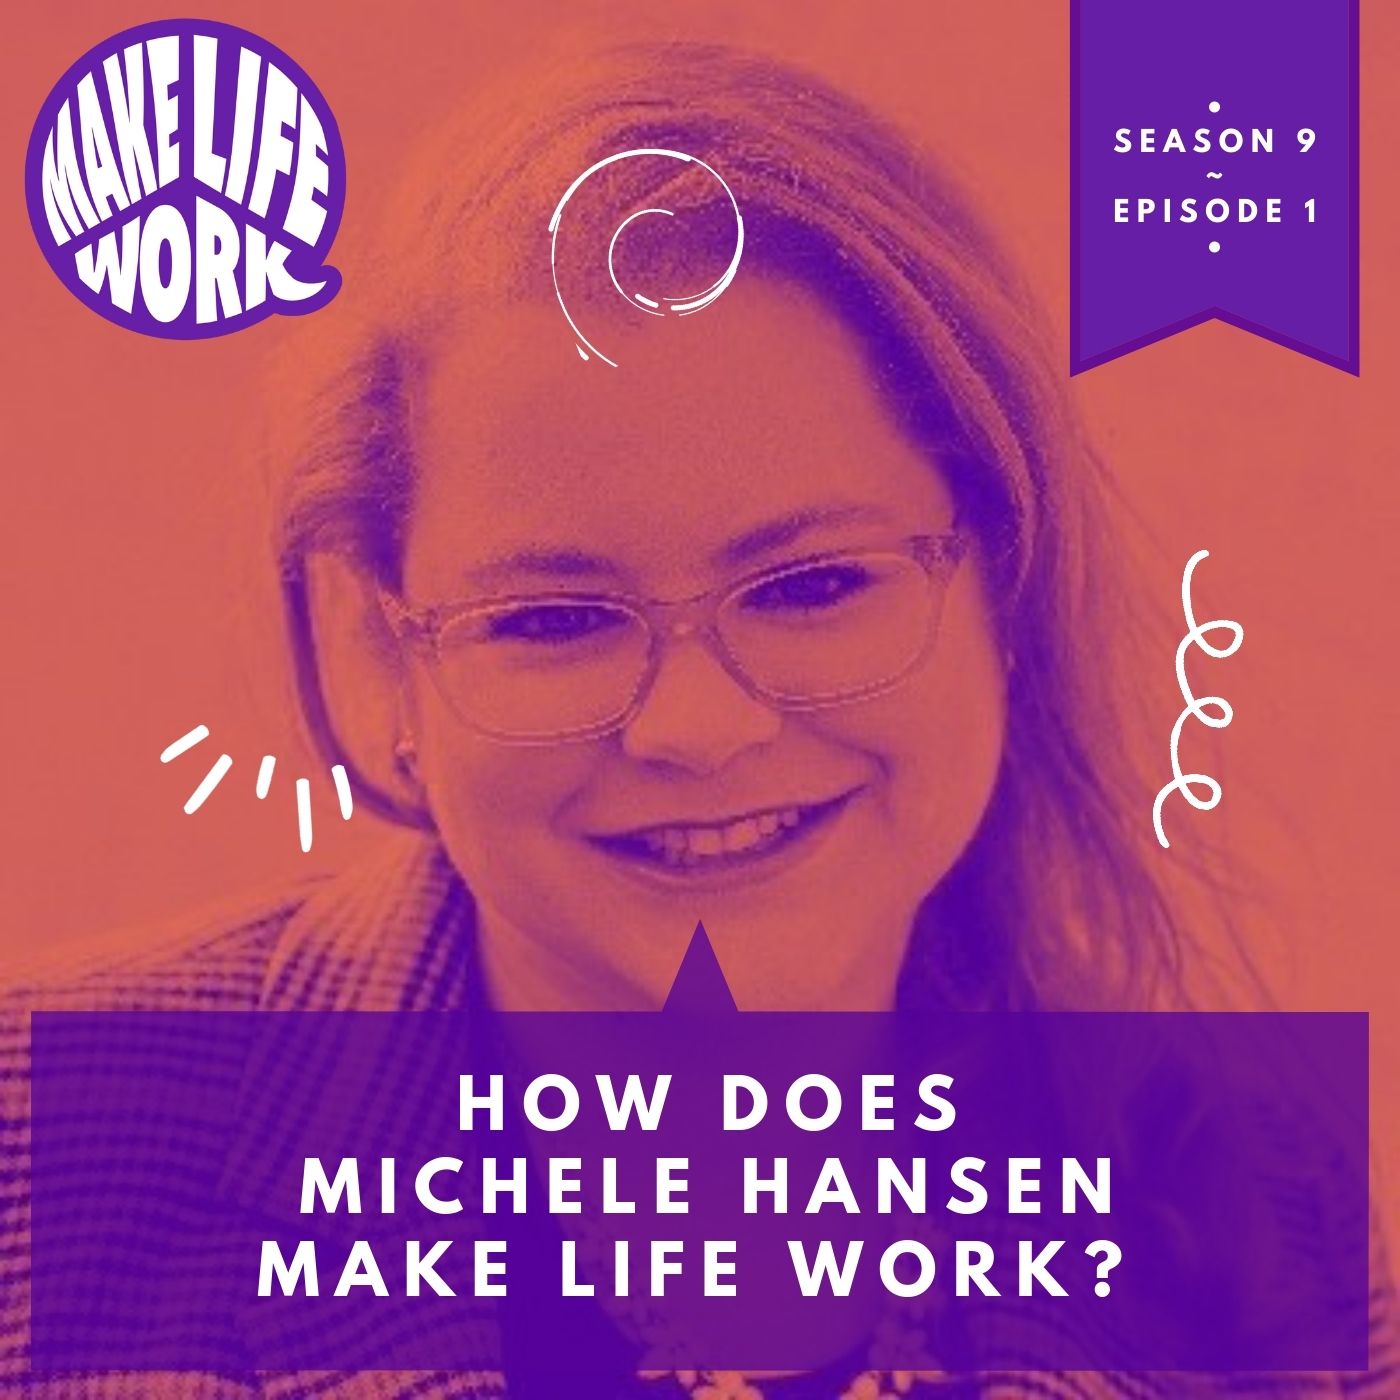 How does Michele Hansen make life work?